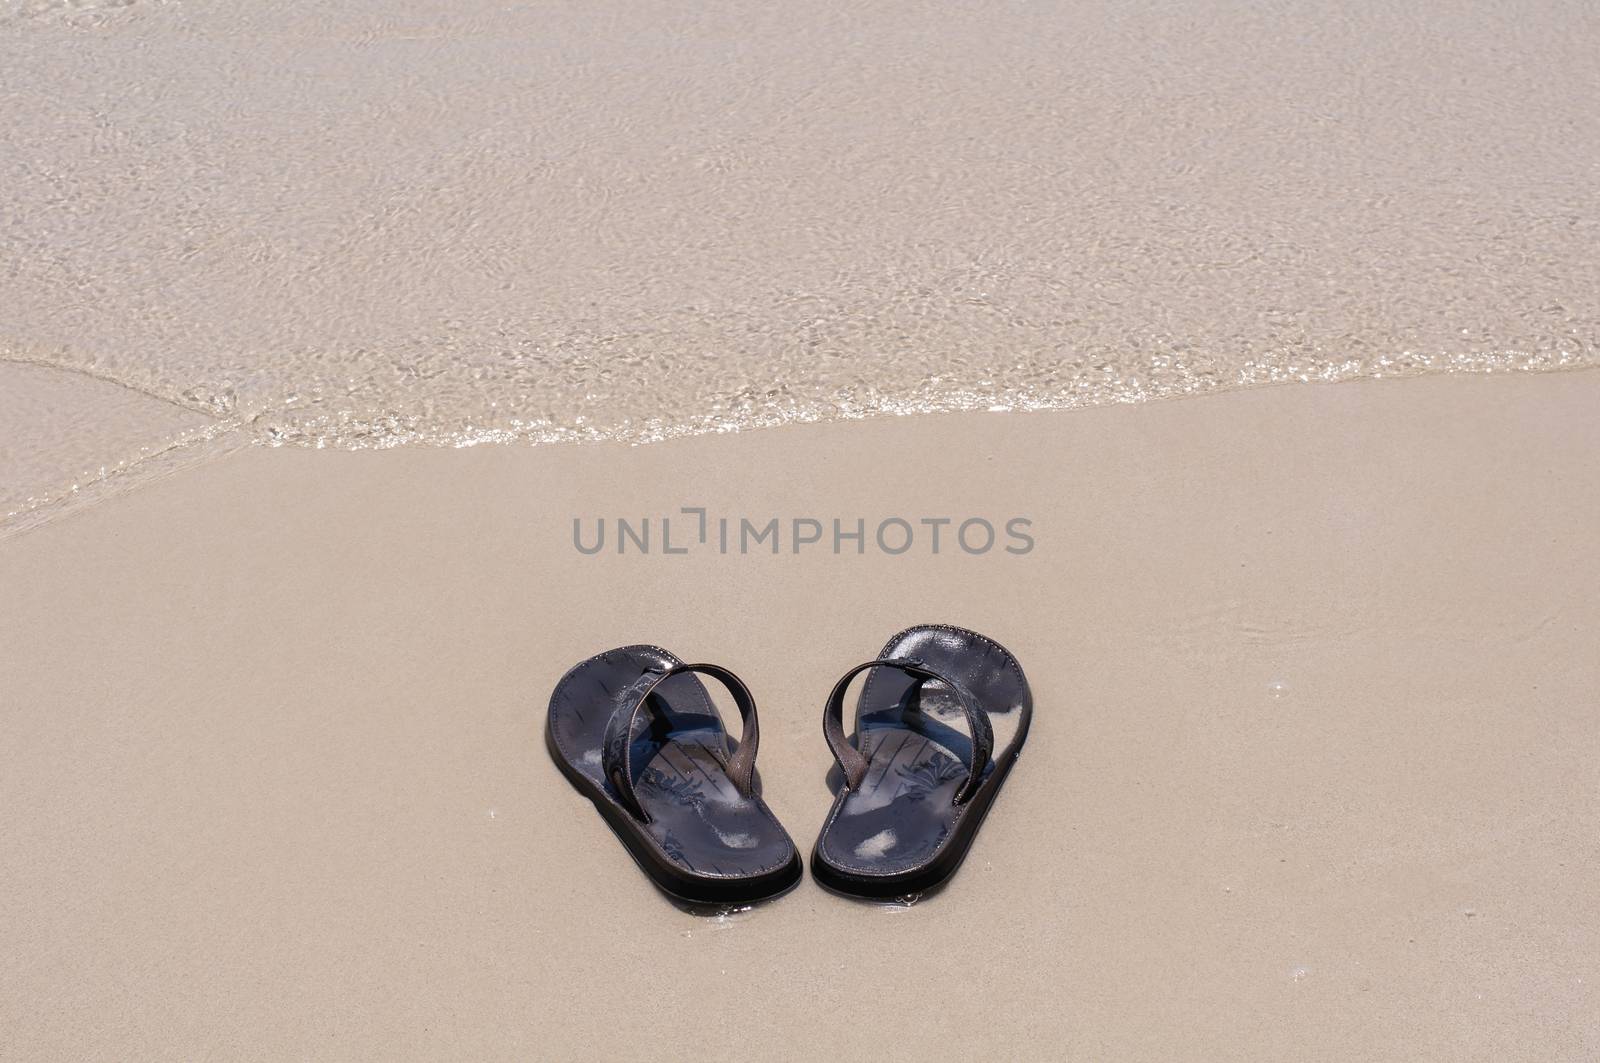 Beach sandals on a sandy beach with background